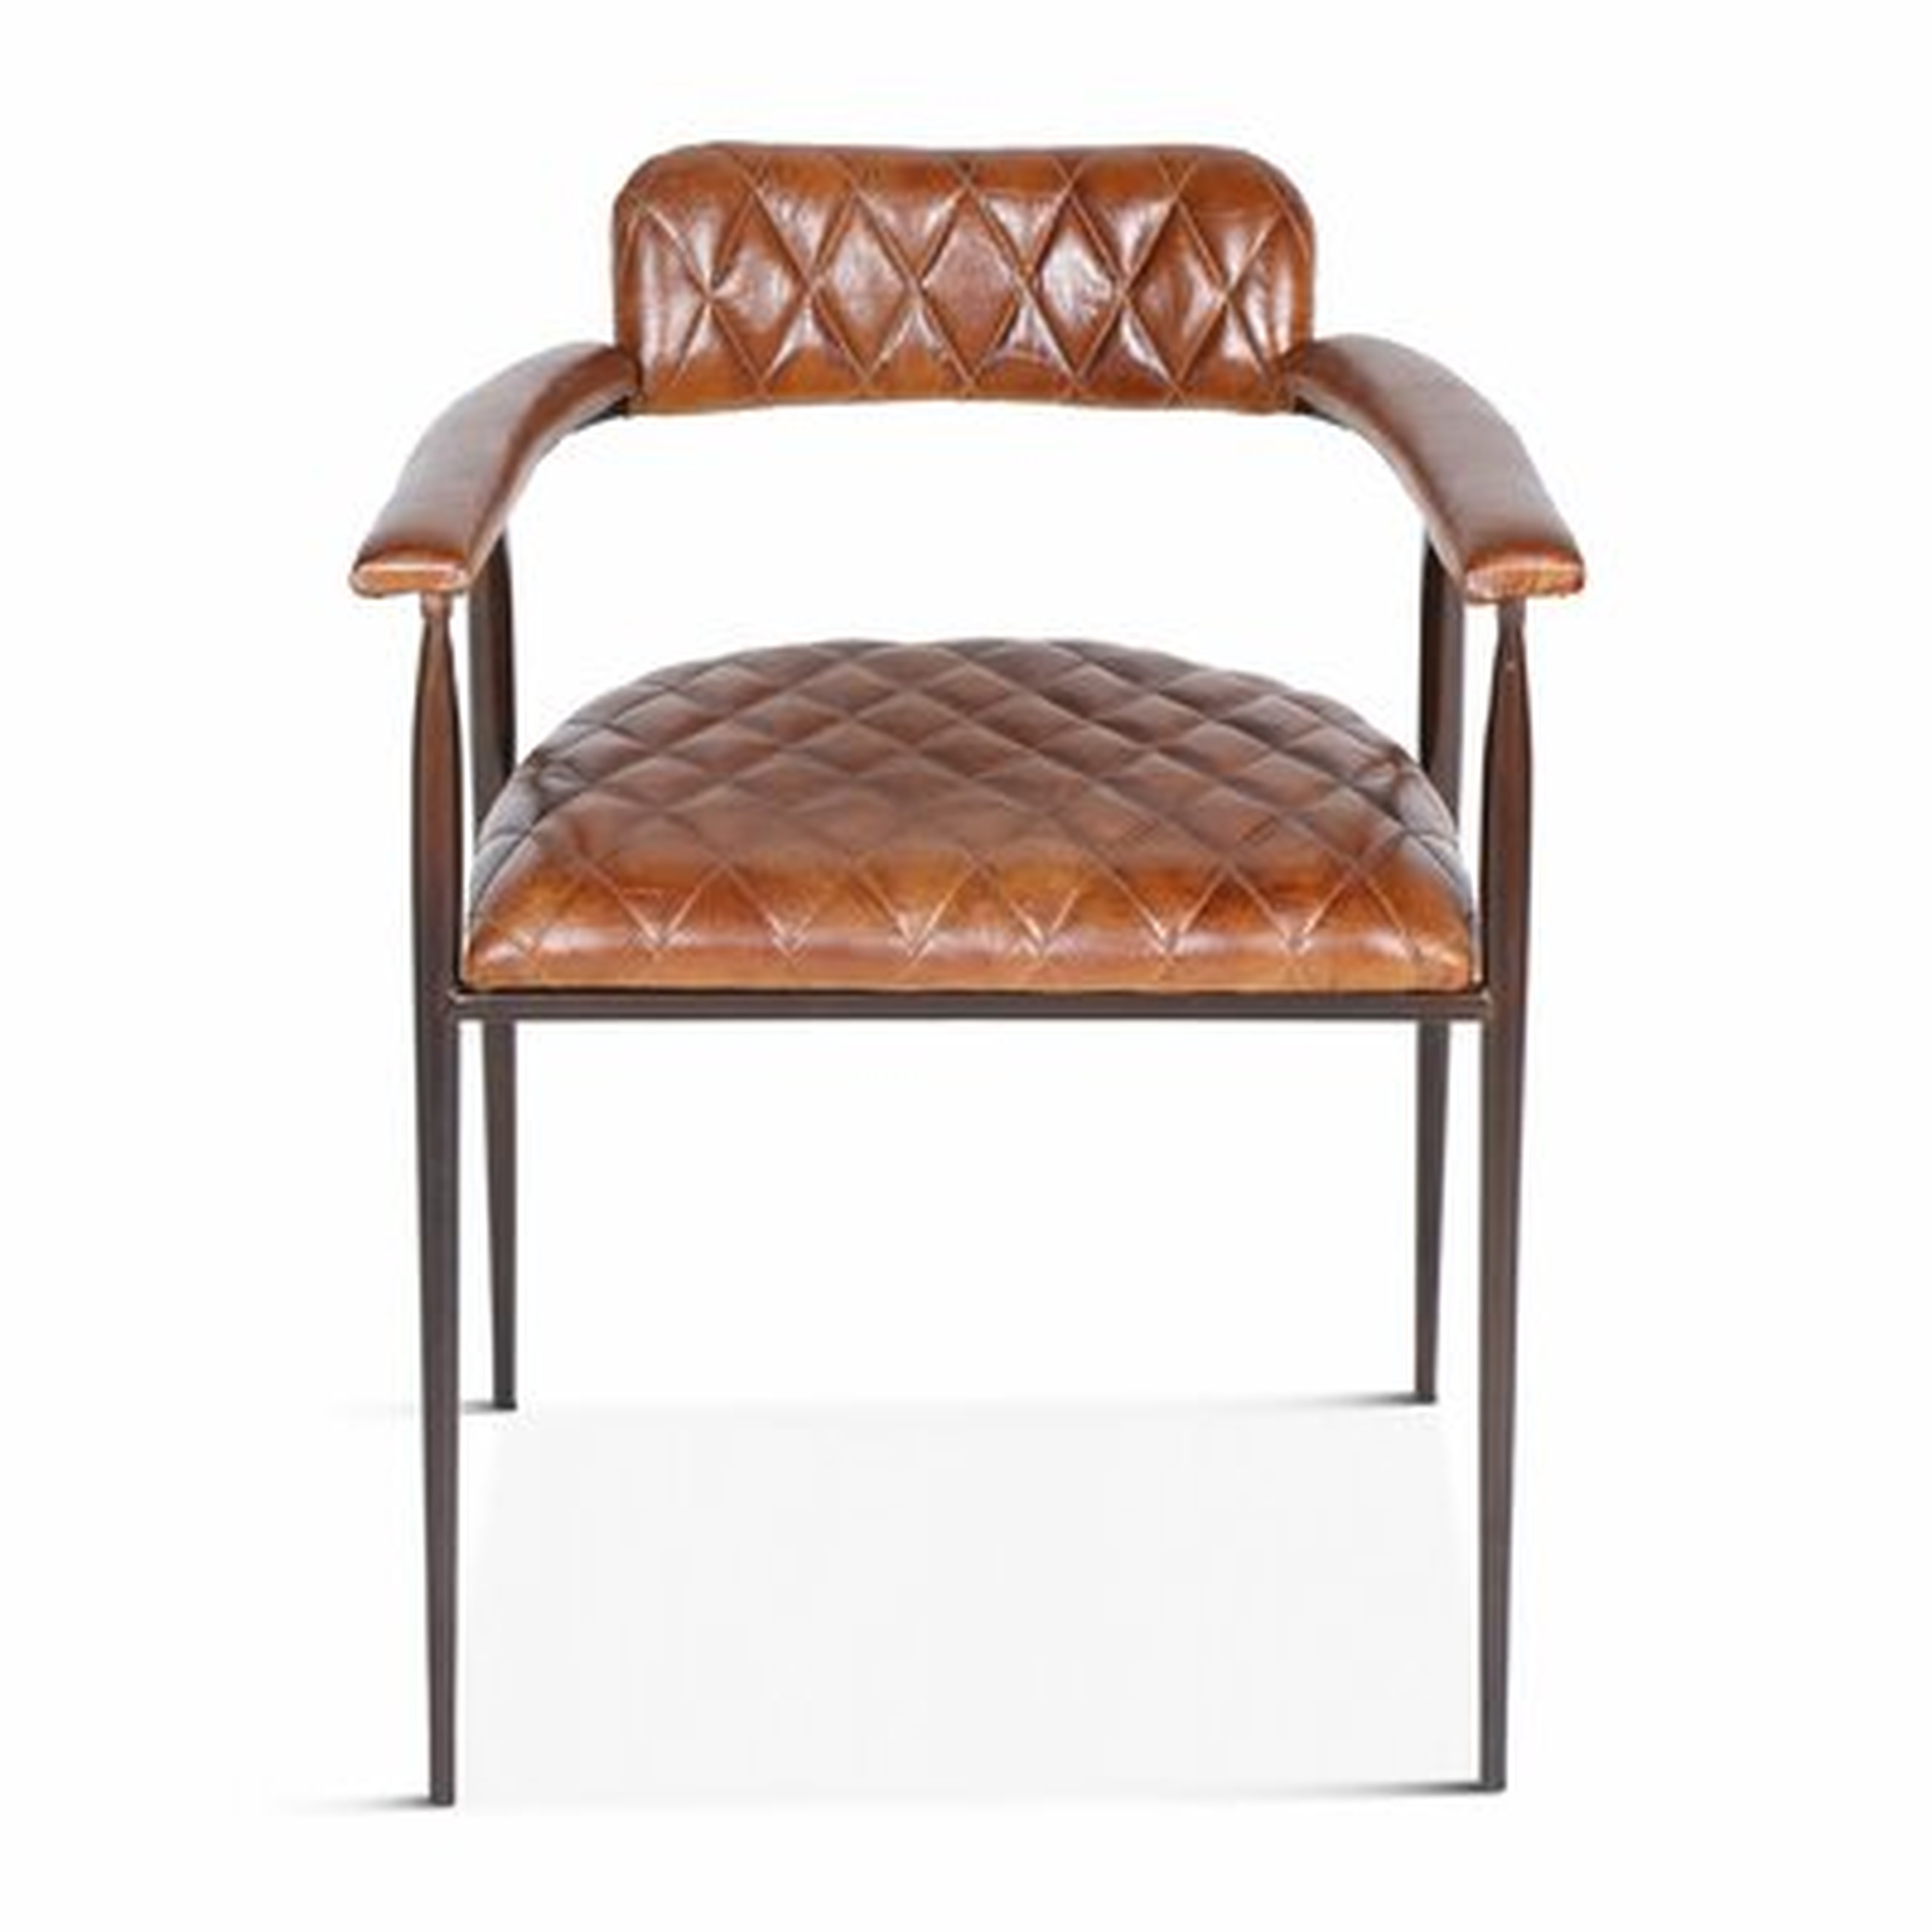 Delgado Leather Upholstered Arm Chair in Brown - Wayfair